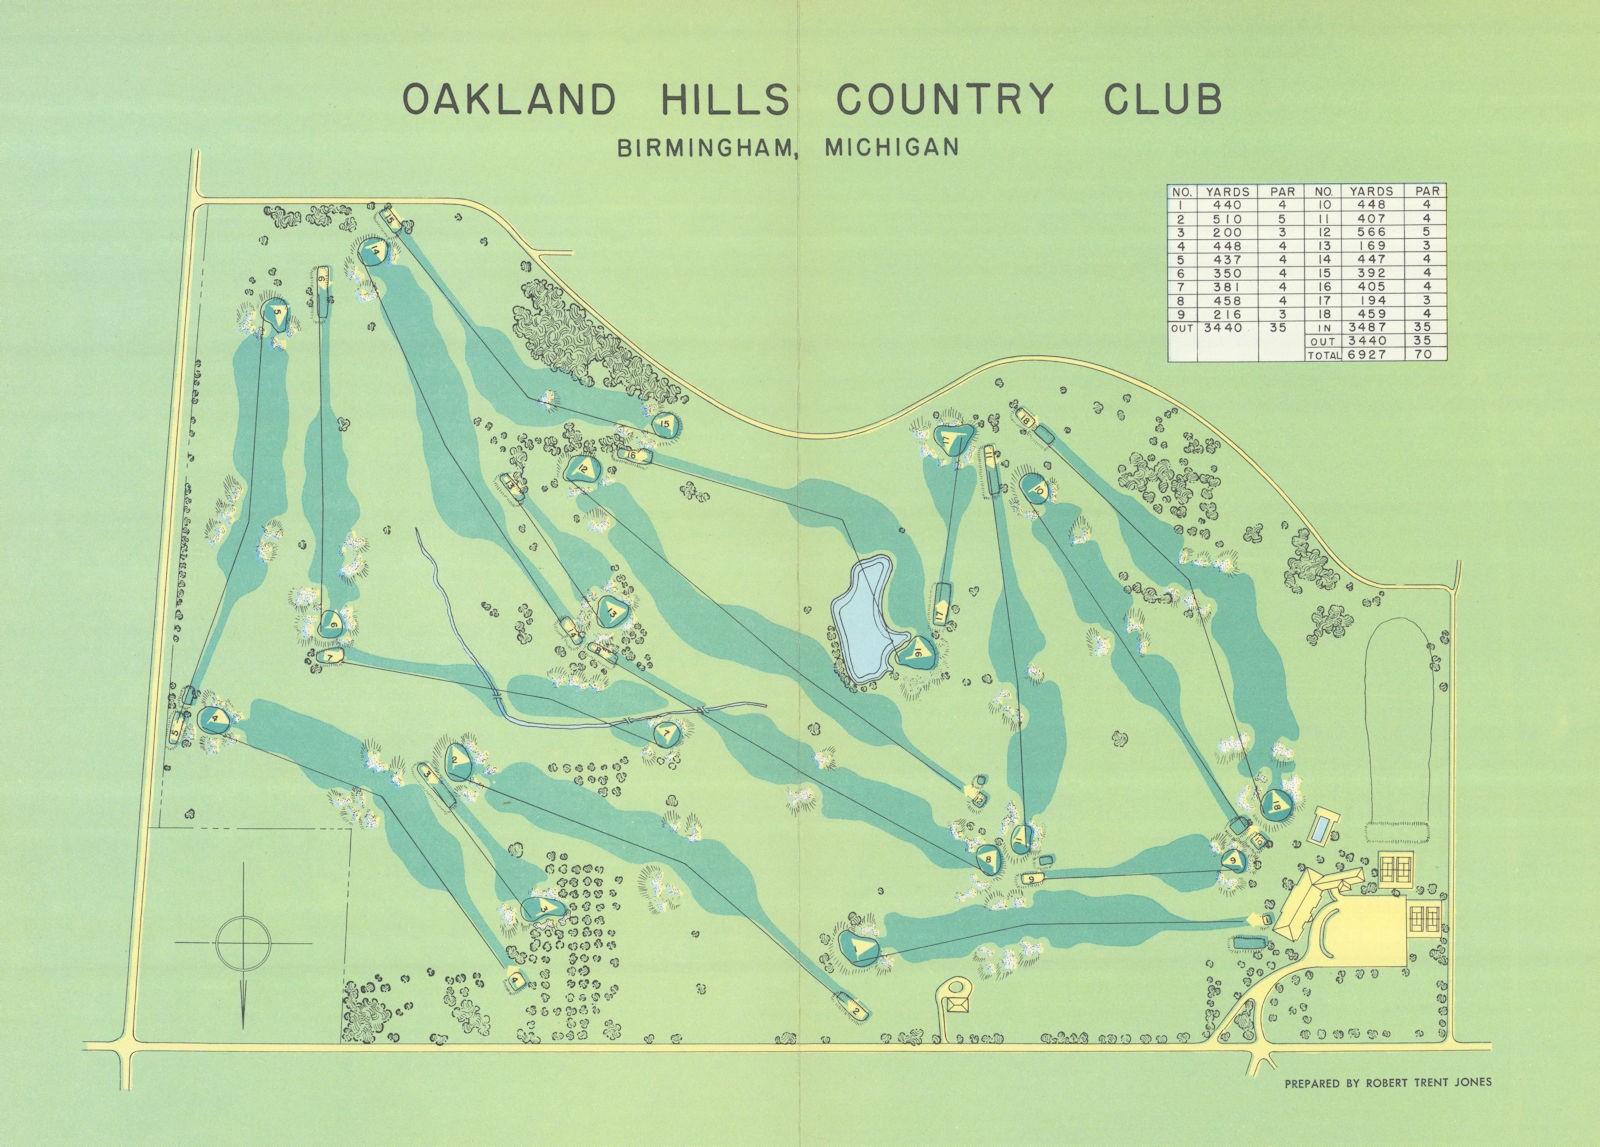 Associate Product Oakland Hills Country Club Michigan Robert Trent Jones golf course plan 1954 map